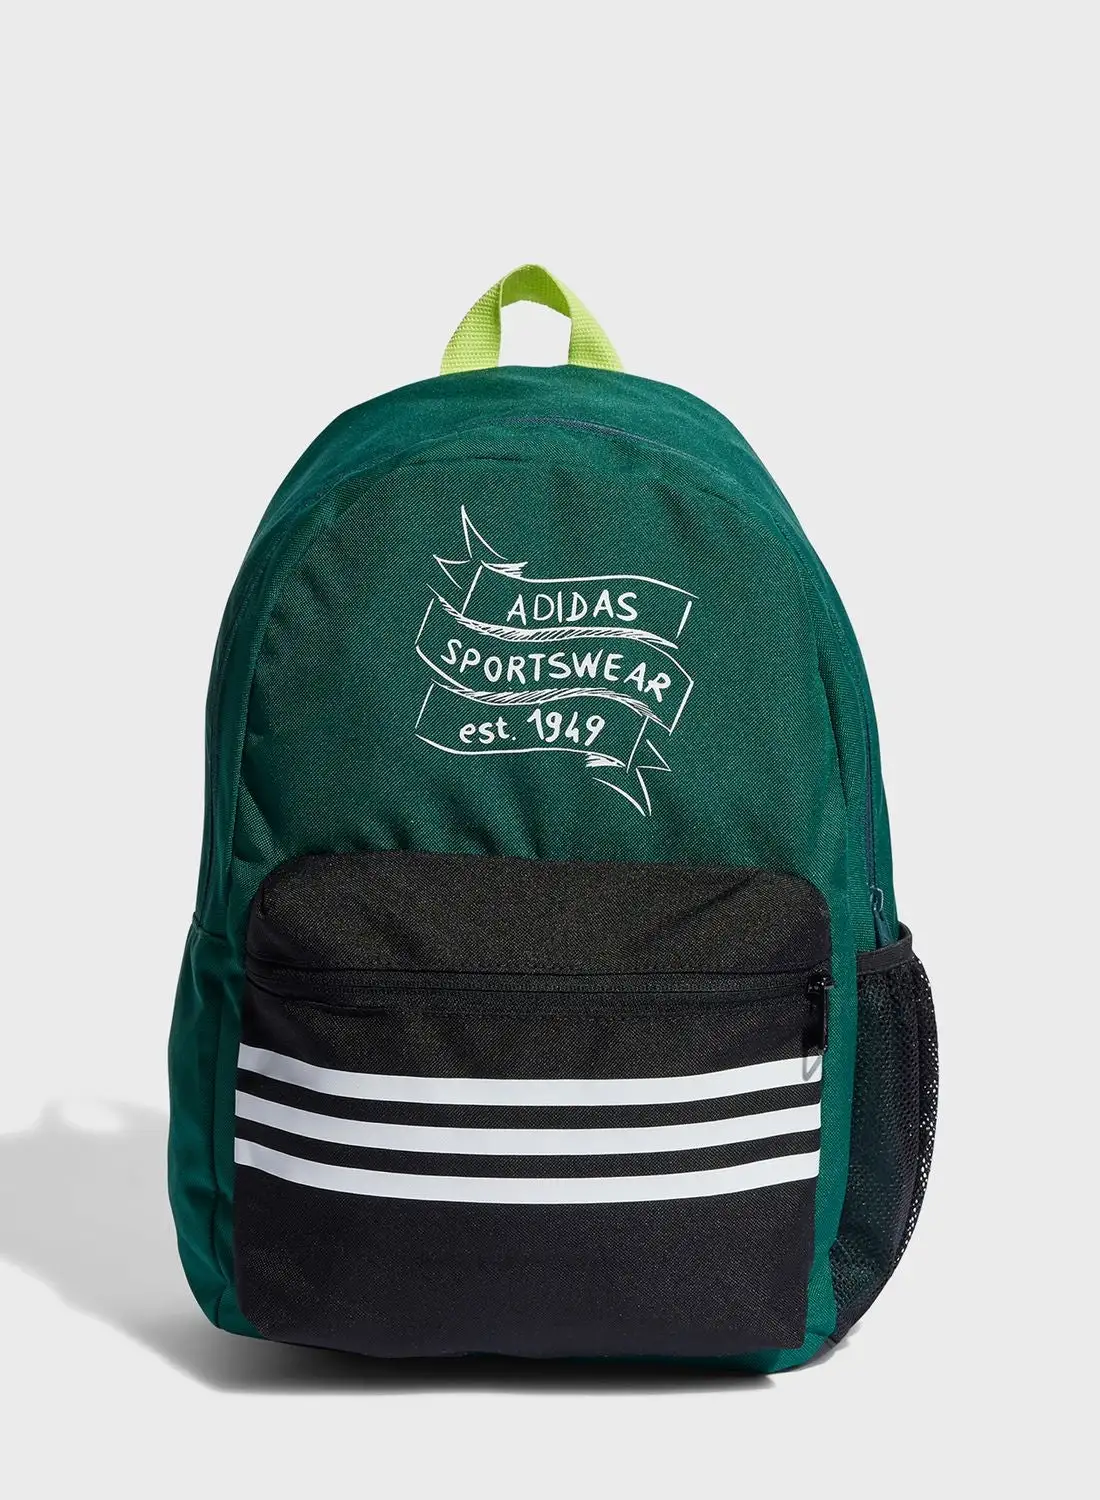 Adidas Brand Love Backpack